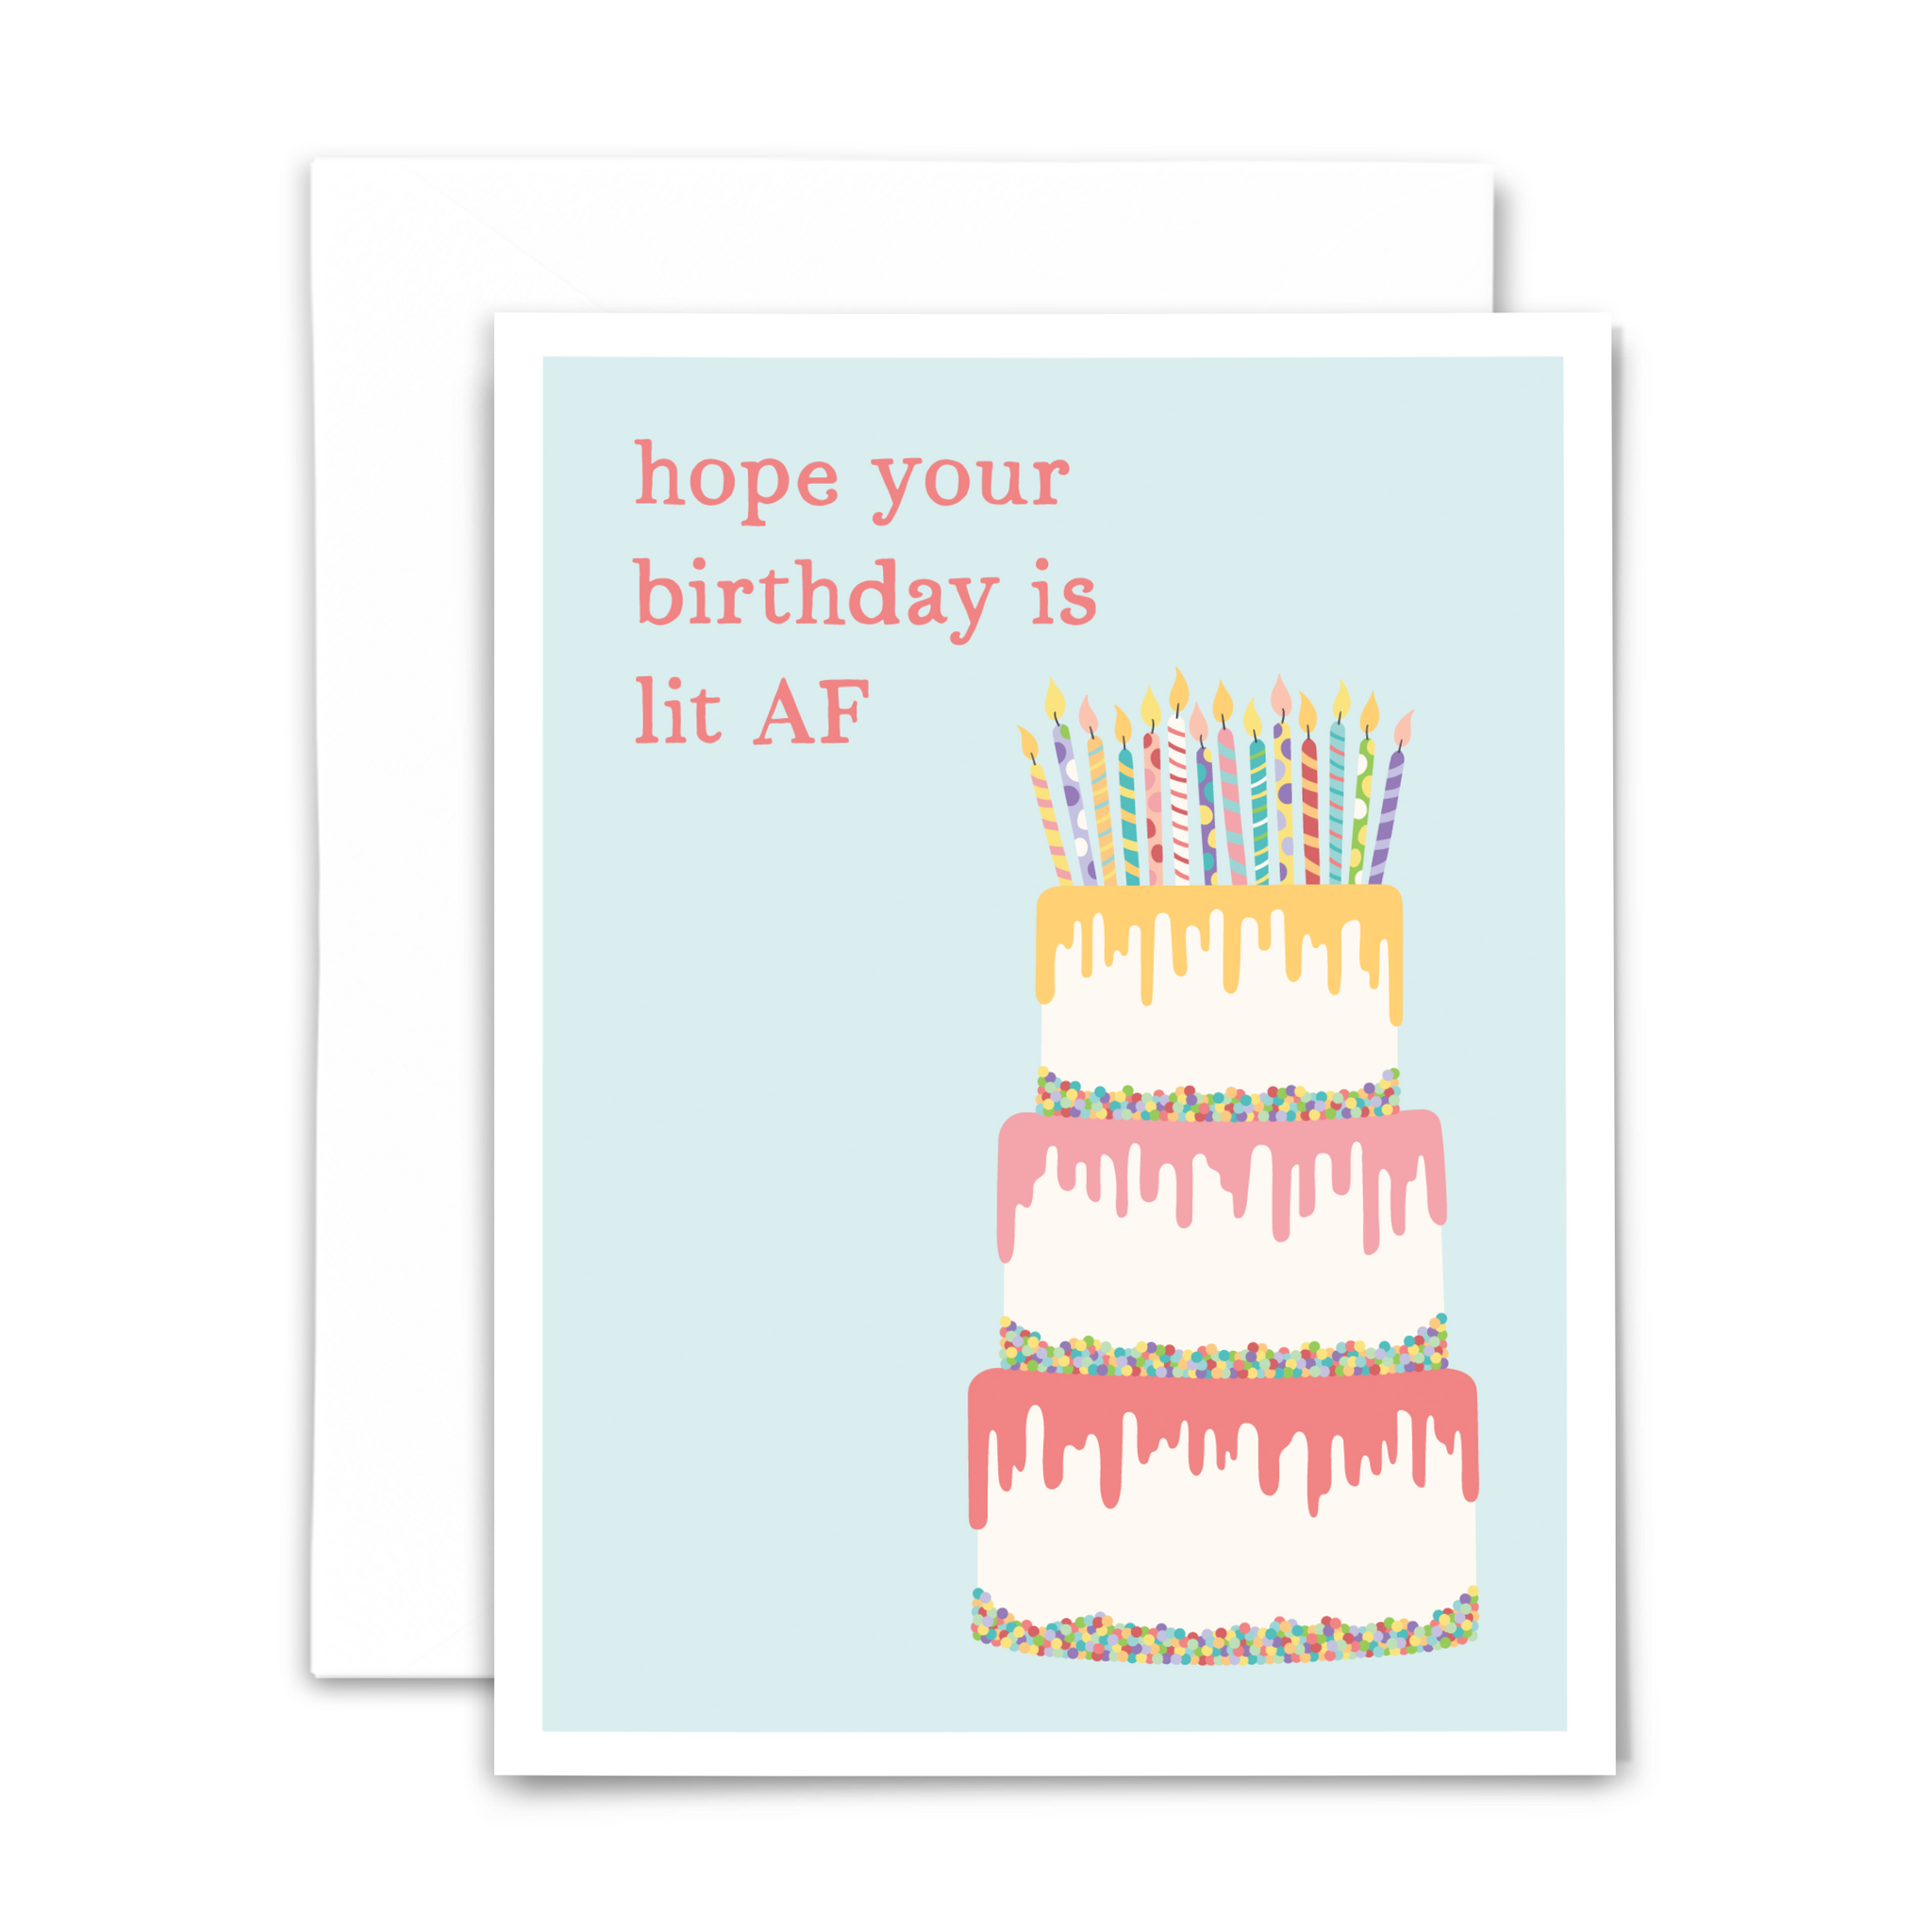 NEW! Lit AF birthday: greeting card